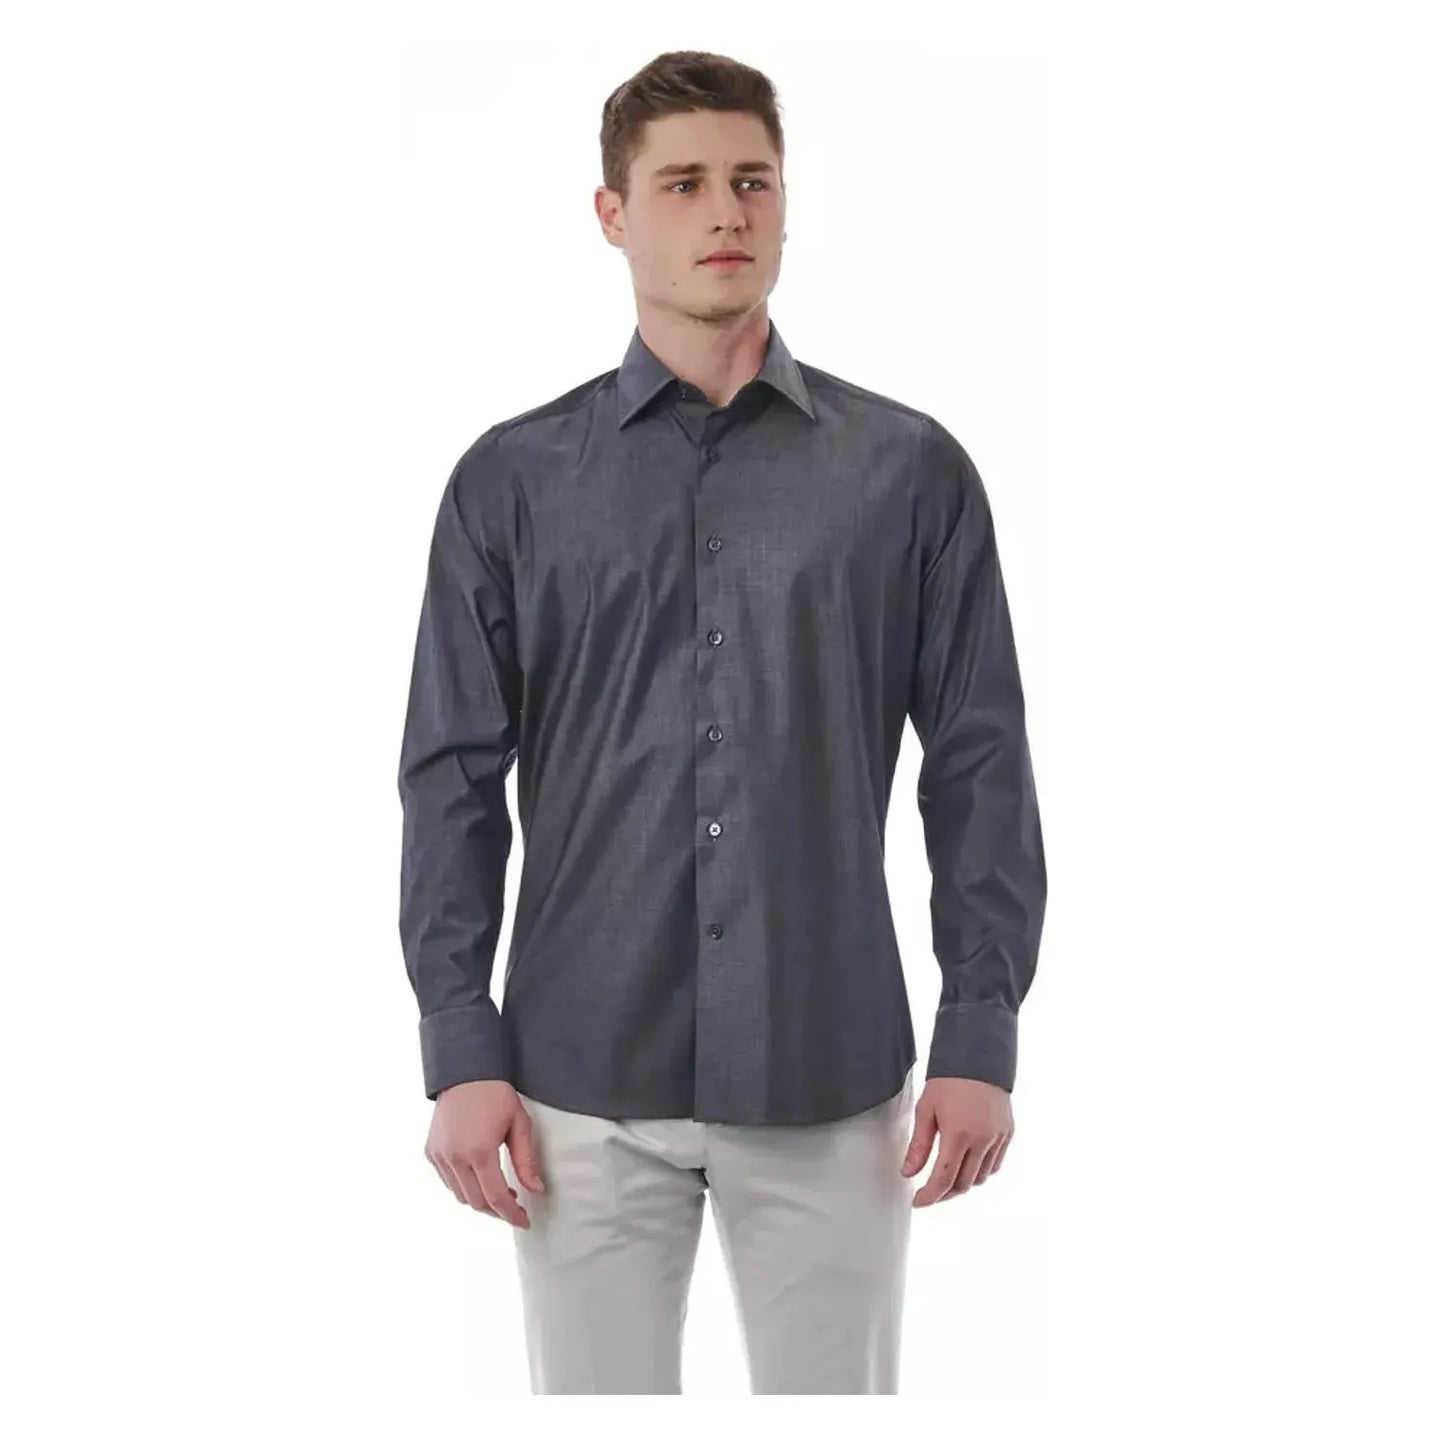 Bagutta Sophisticated Gray Italian Collar Shirt gray-cotton-shirt-3